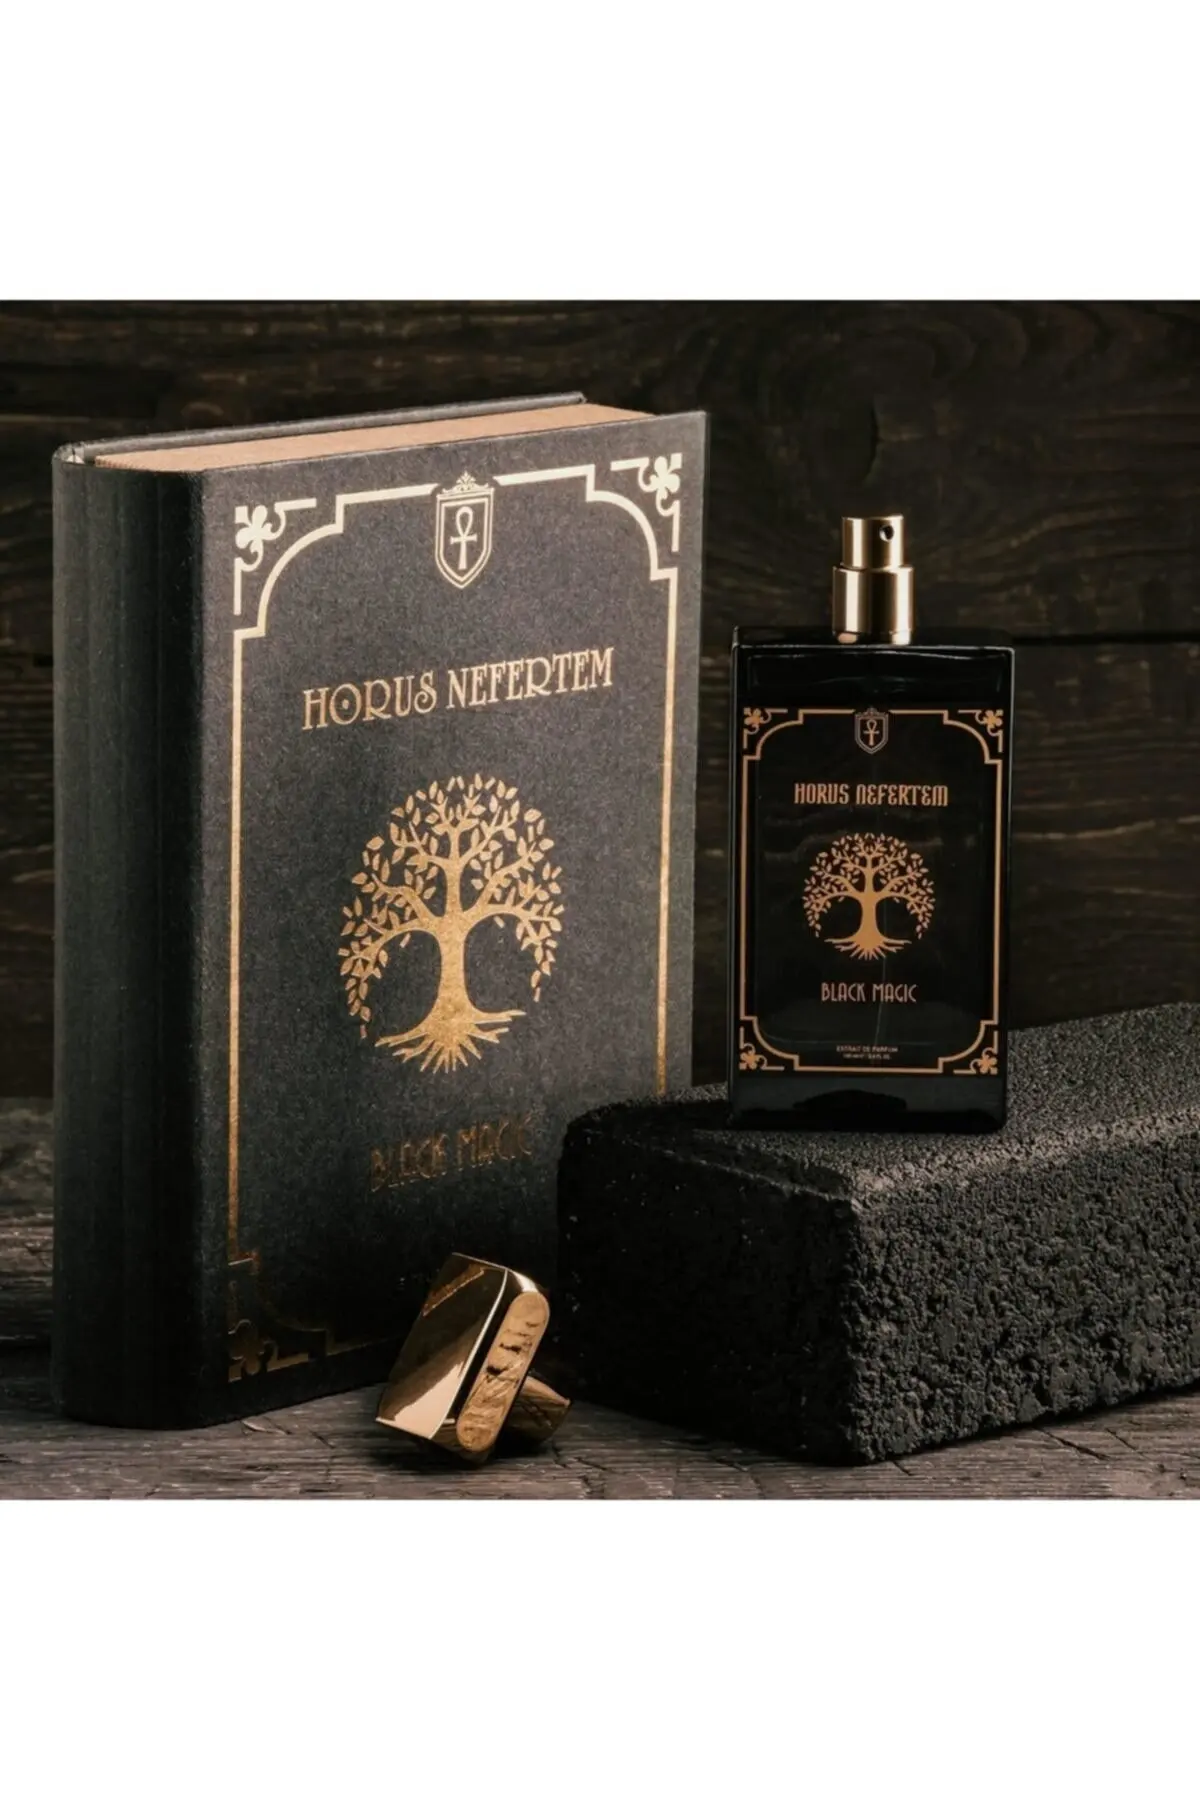 Horus Nefertem Aphrodisiaque Edp BLACK MAGIC 100 Ml Classy Men's Aphrodisiac Perfume Tempting Fragrance For Women Premium